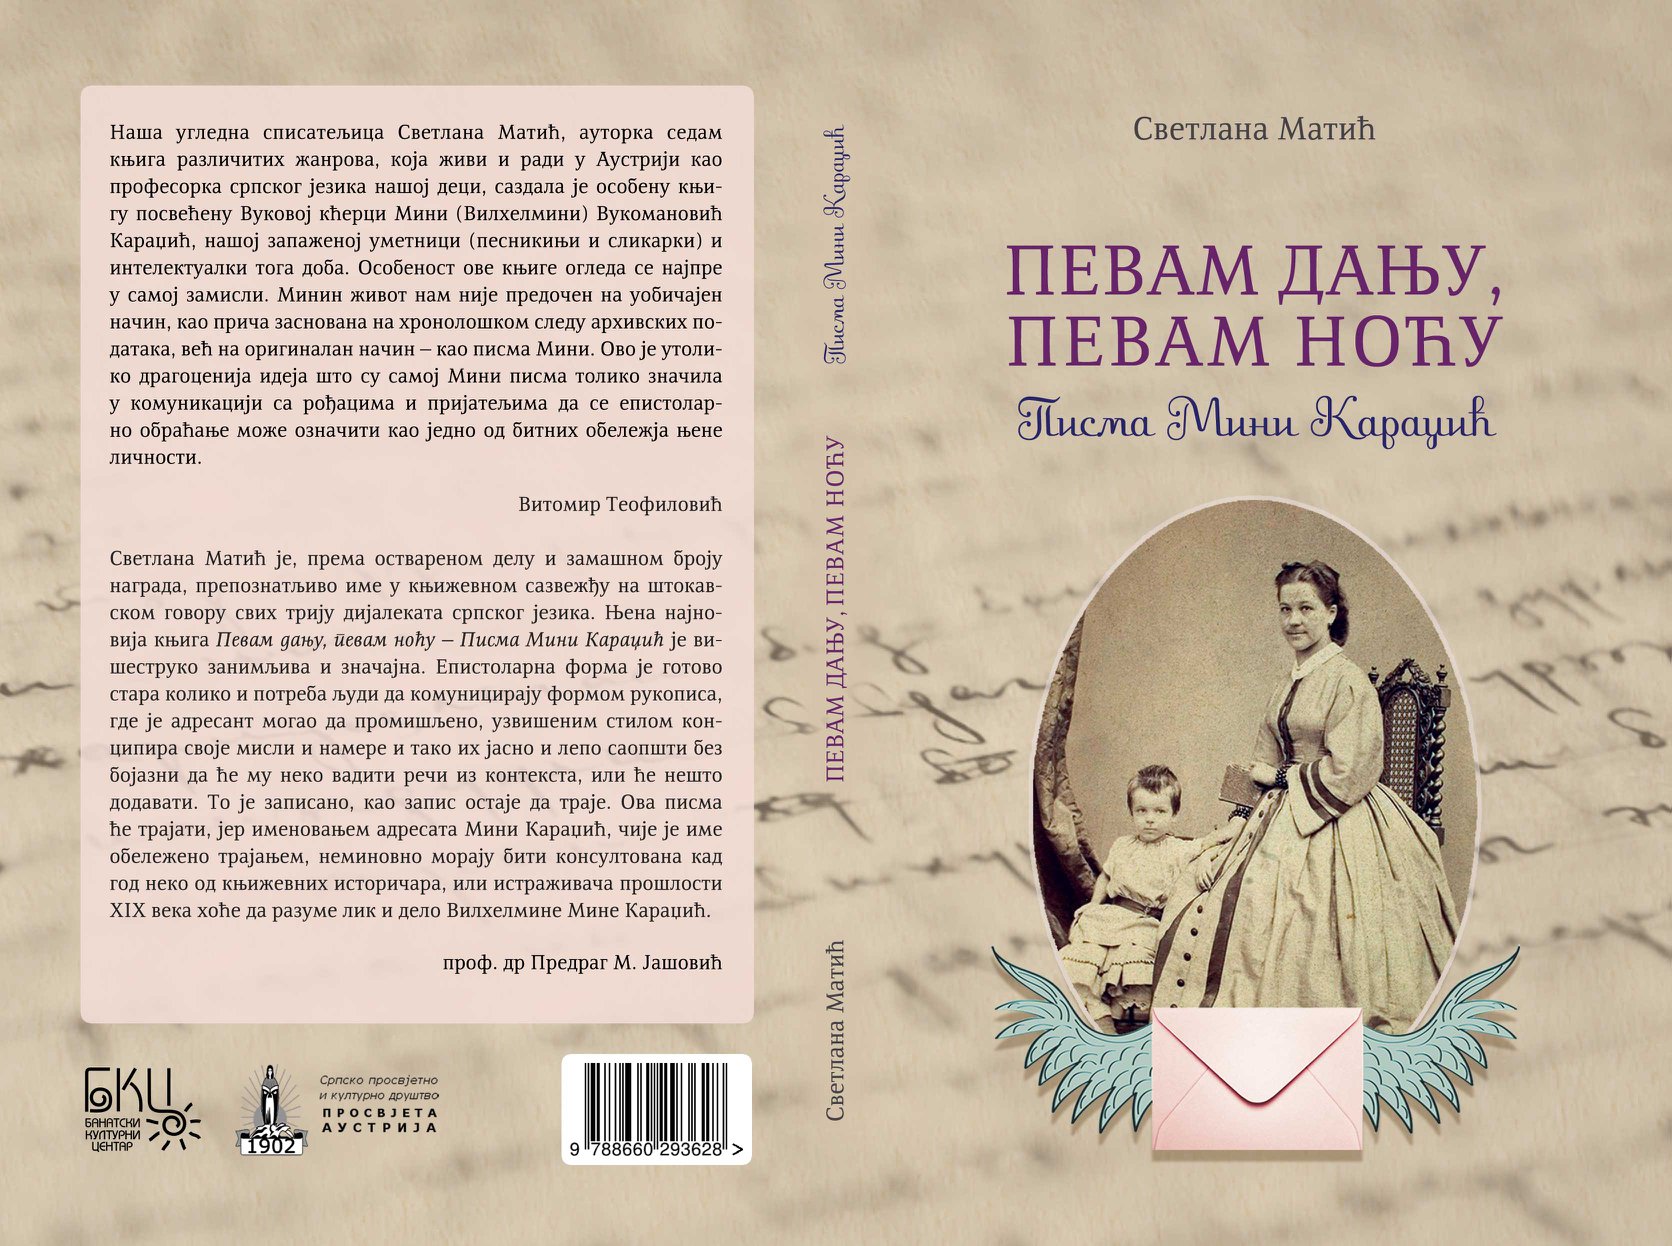 Beč: Promocijа knjige o Mini Kаrаdžić